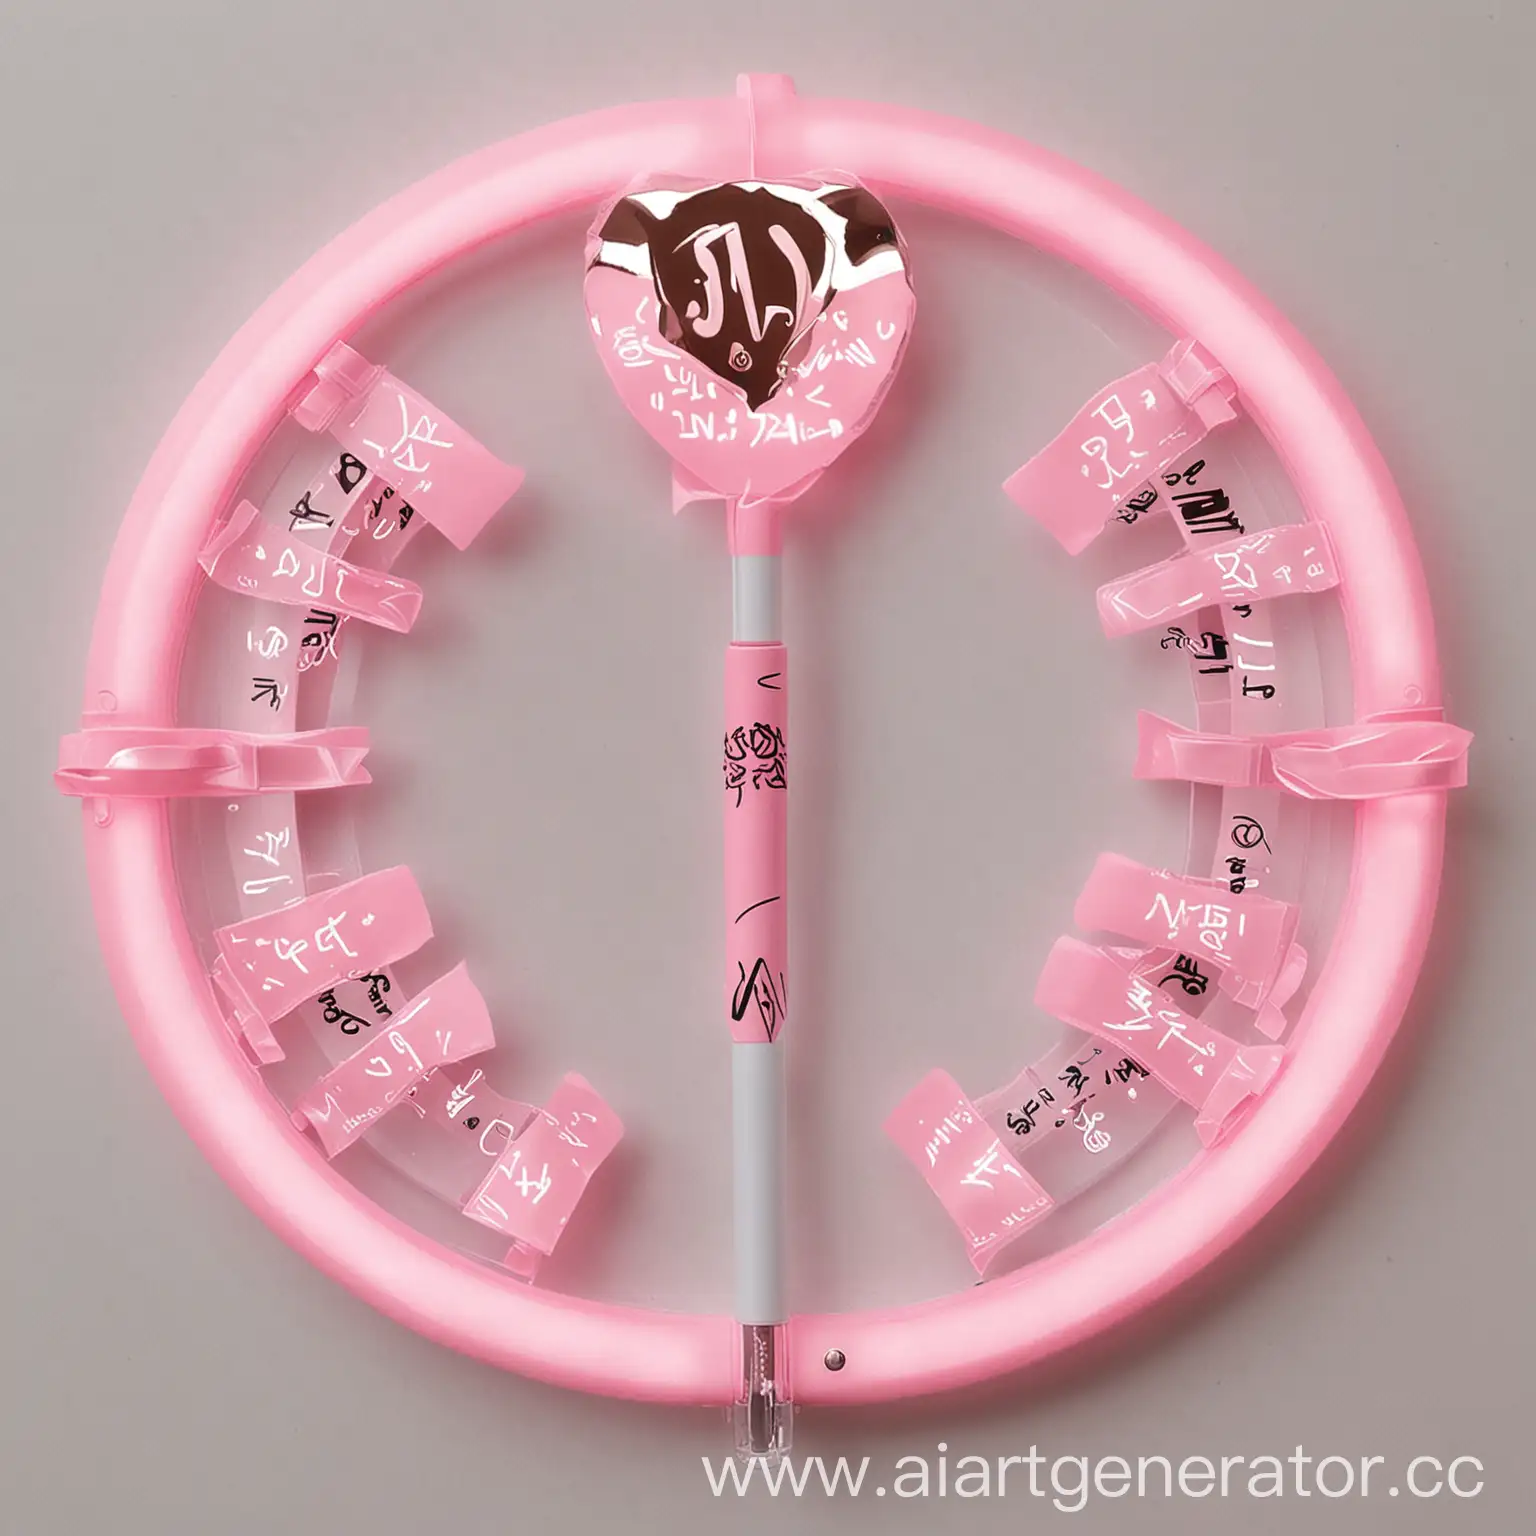 VIVACE-Kpop-Group-Lightstick-Holder-with-Pink-Circular-Design